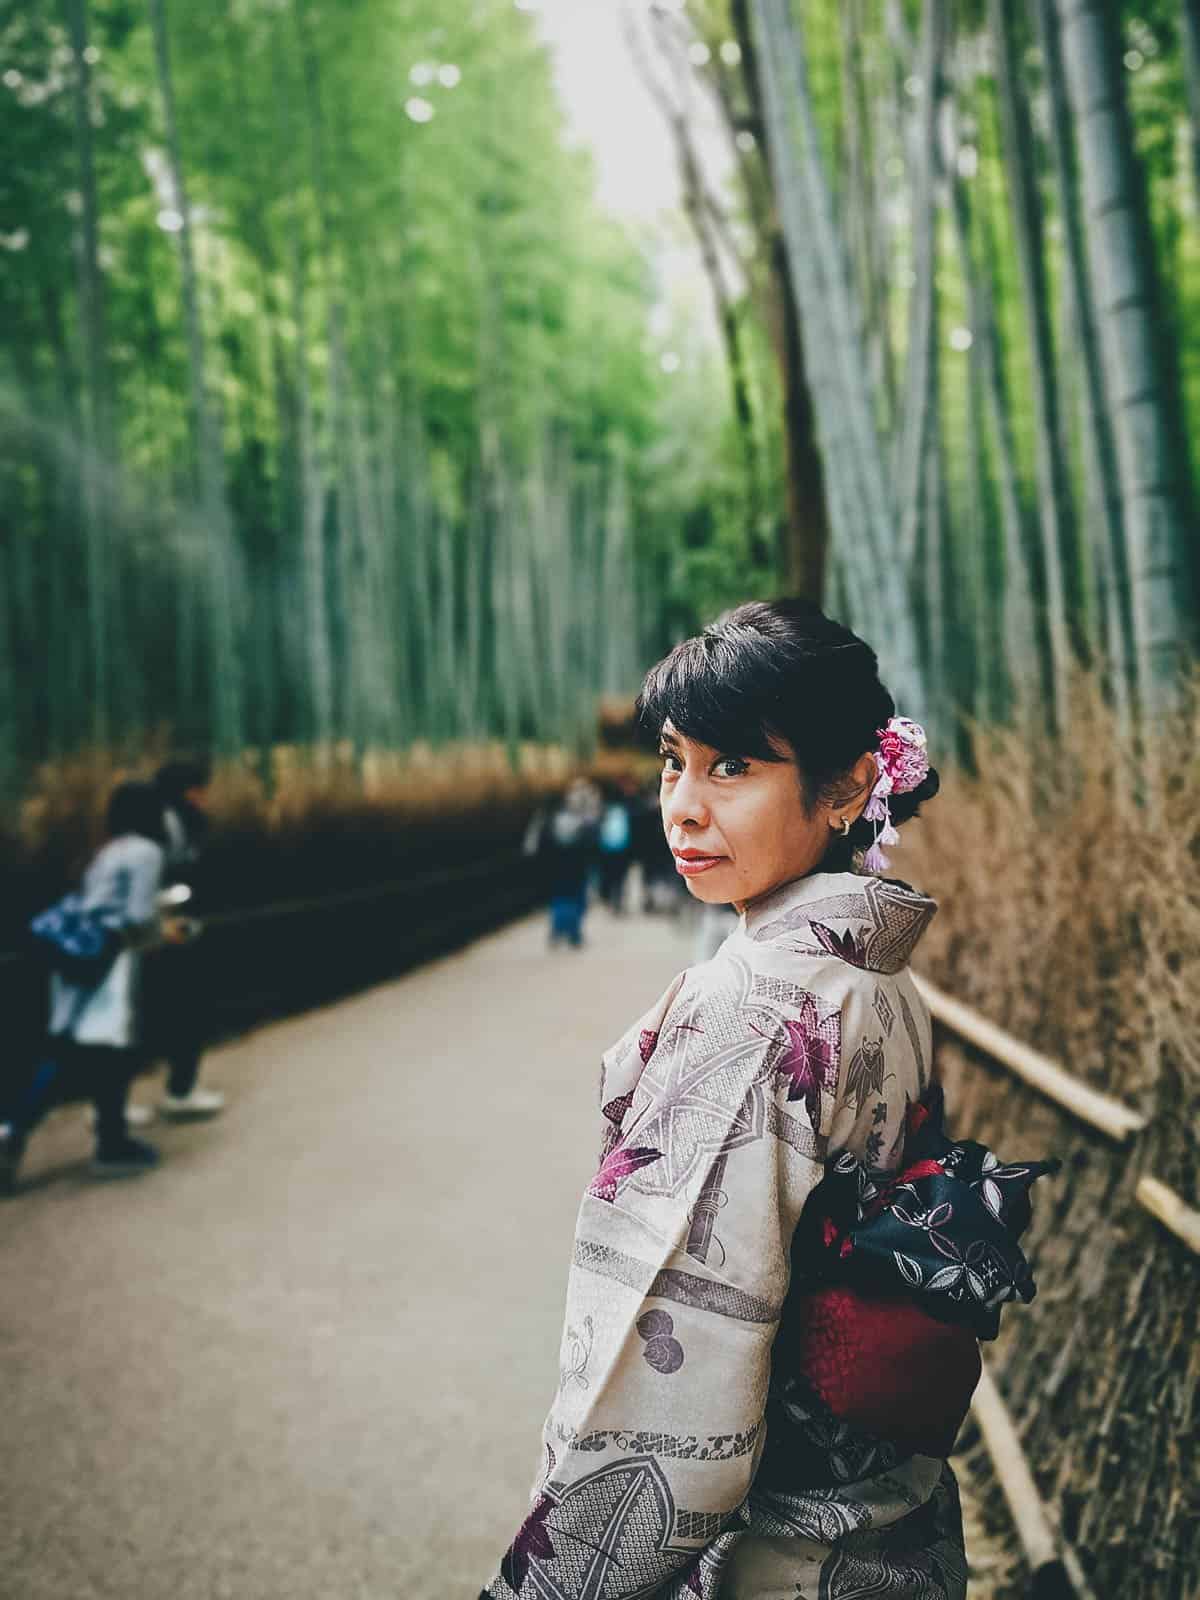 Arashiyama Bamboo Groves, Kyoto, Japan